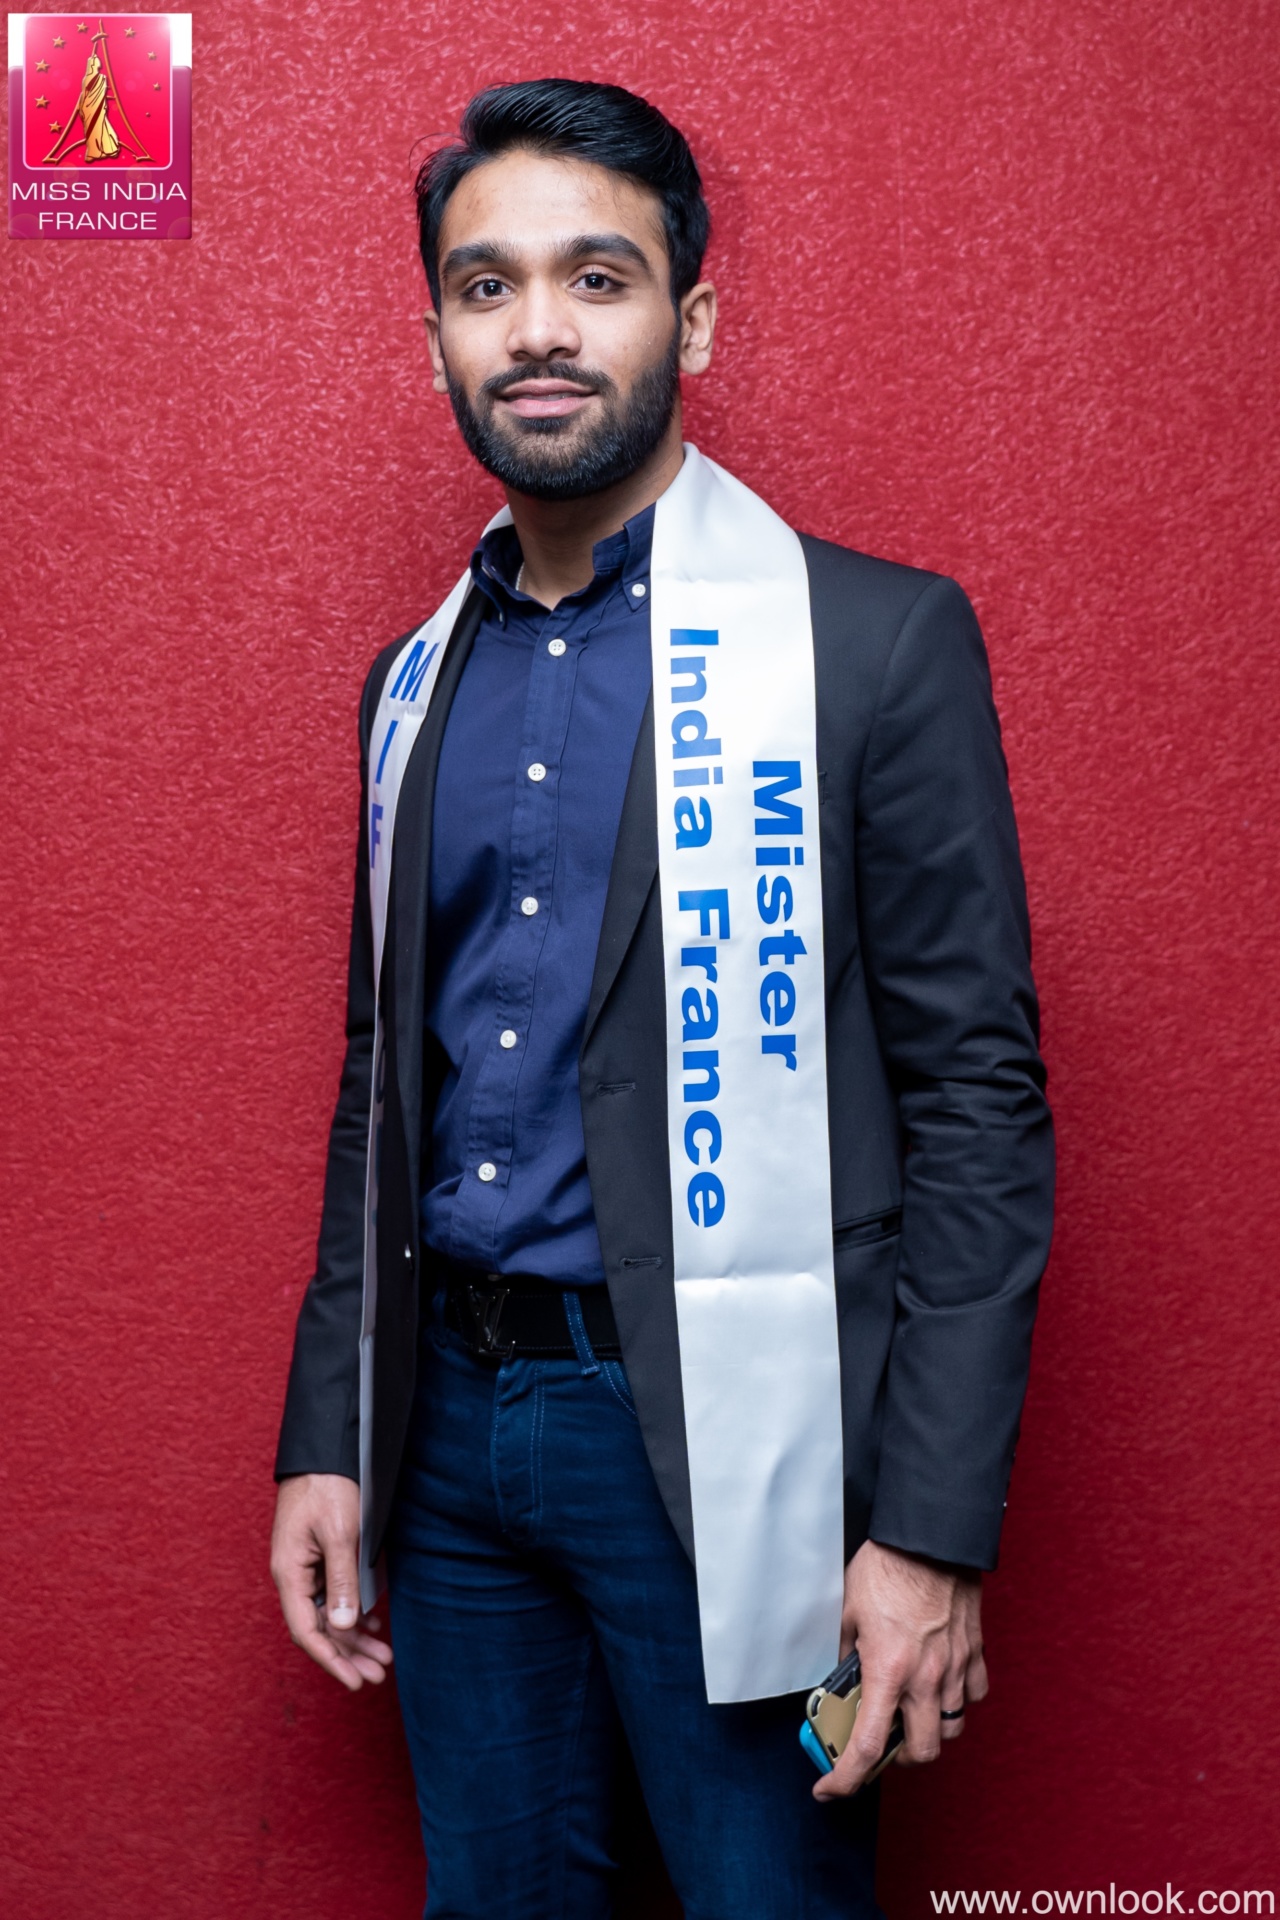 Mister India France 2020 (36)